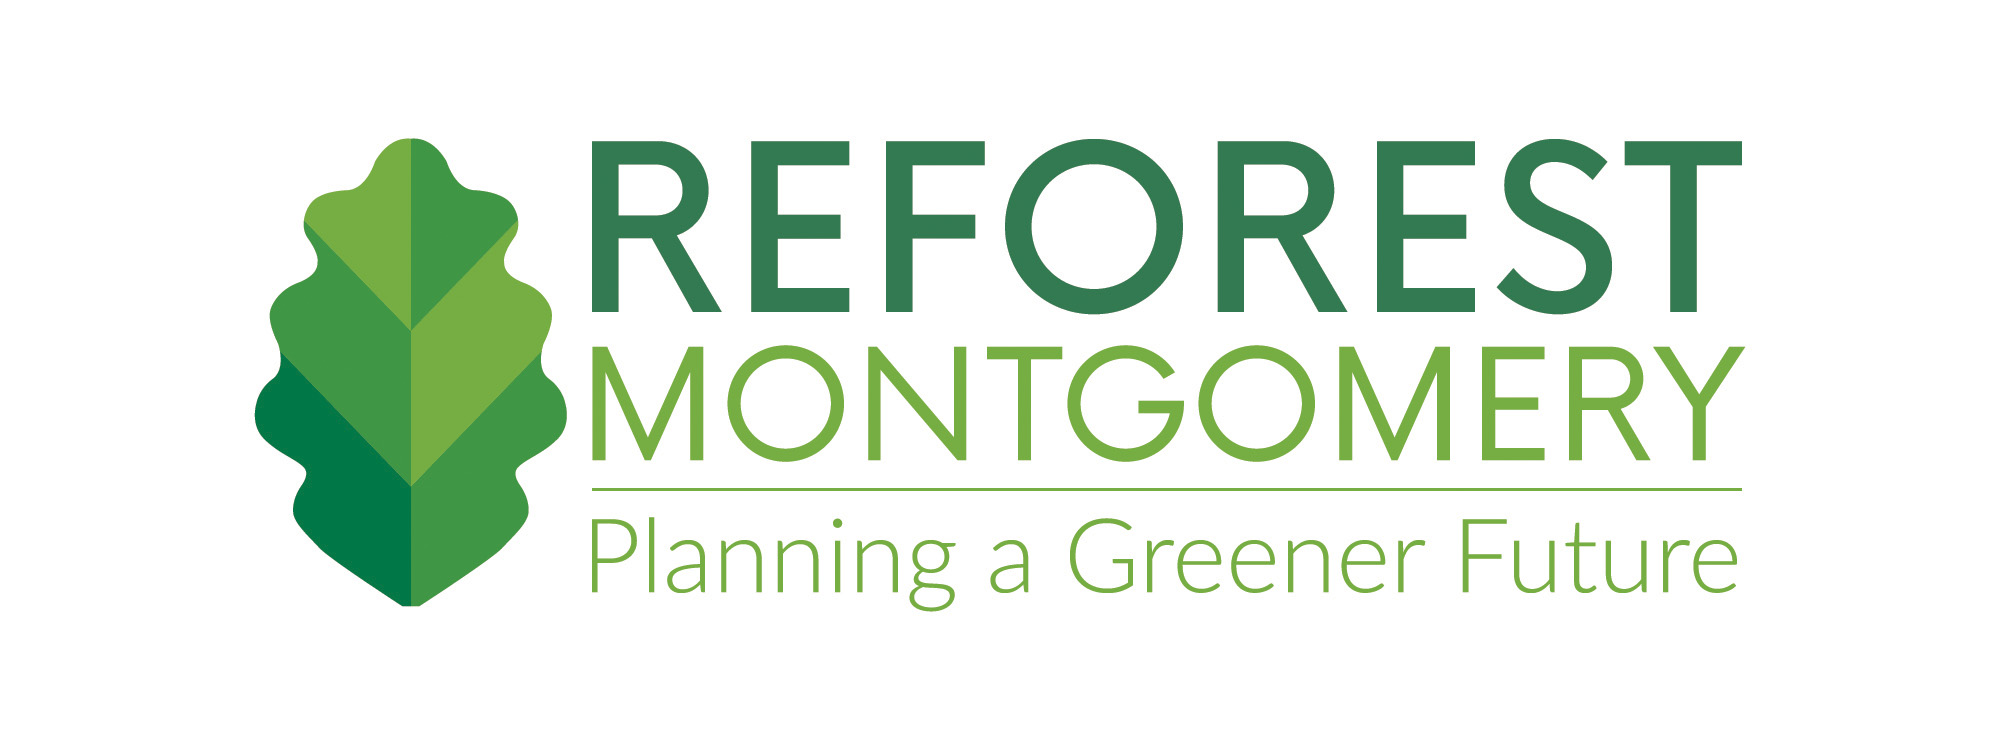 Reforest Montgomery: Planning a Greener Future